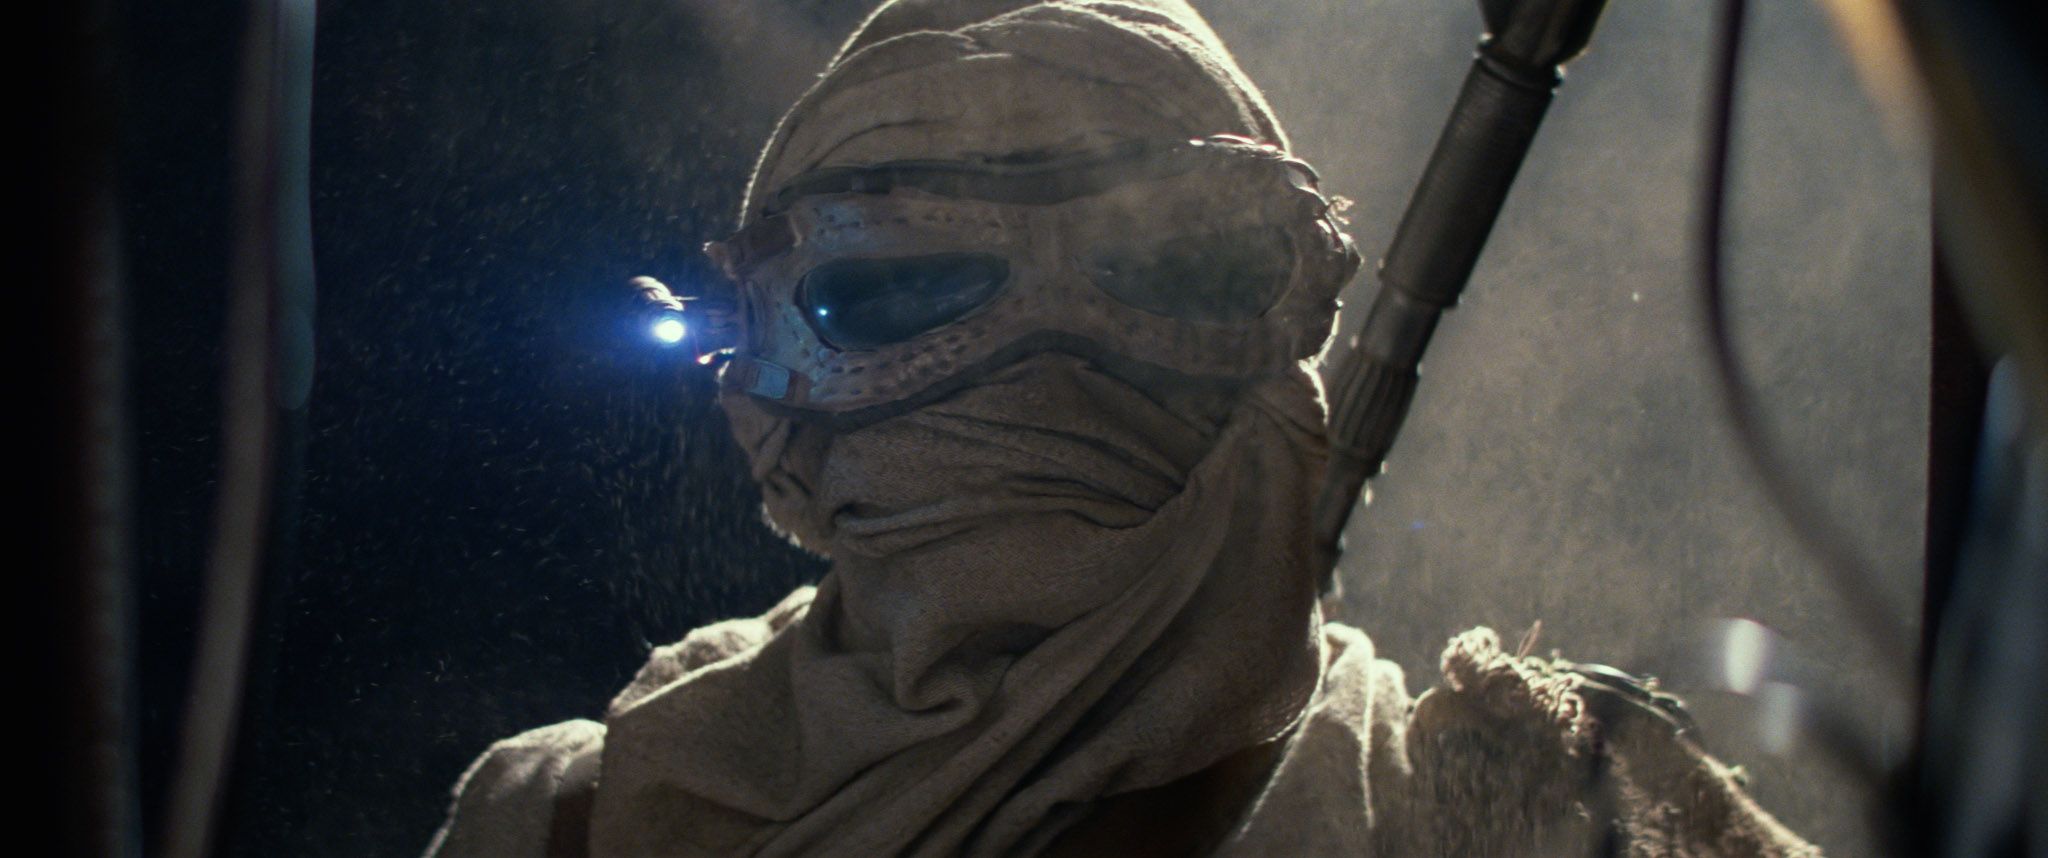 Star Wars 7 Trailer #3 - Rey's Explorer Costume